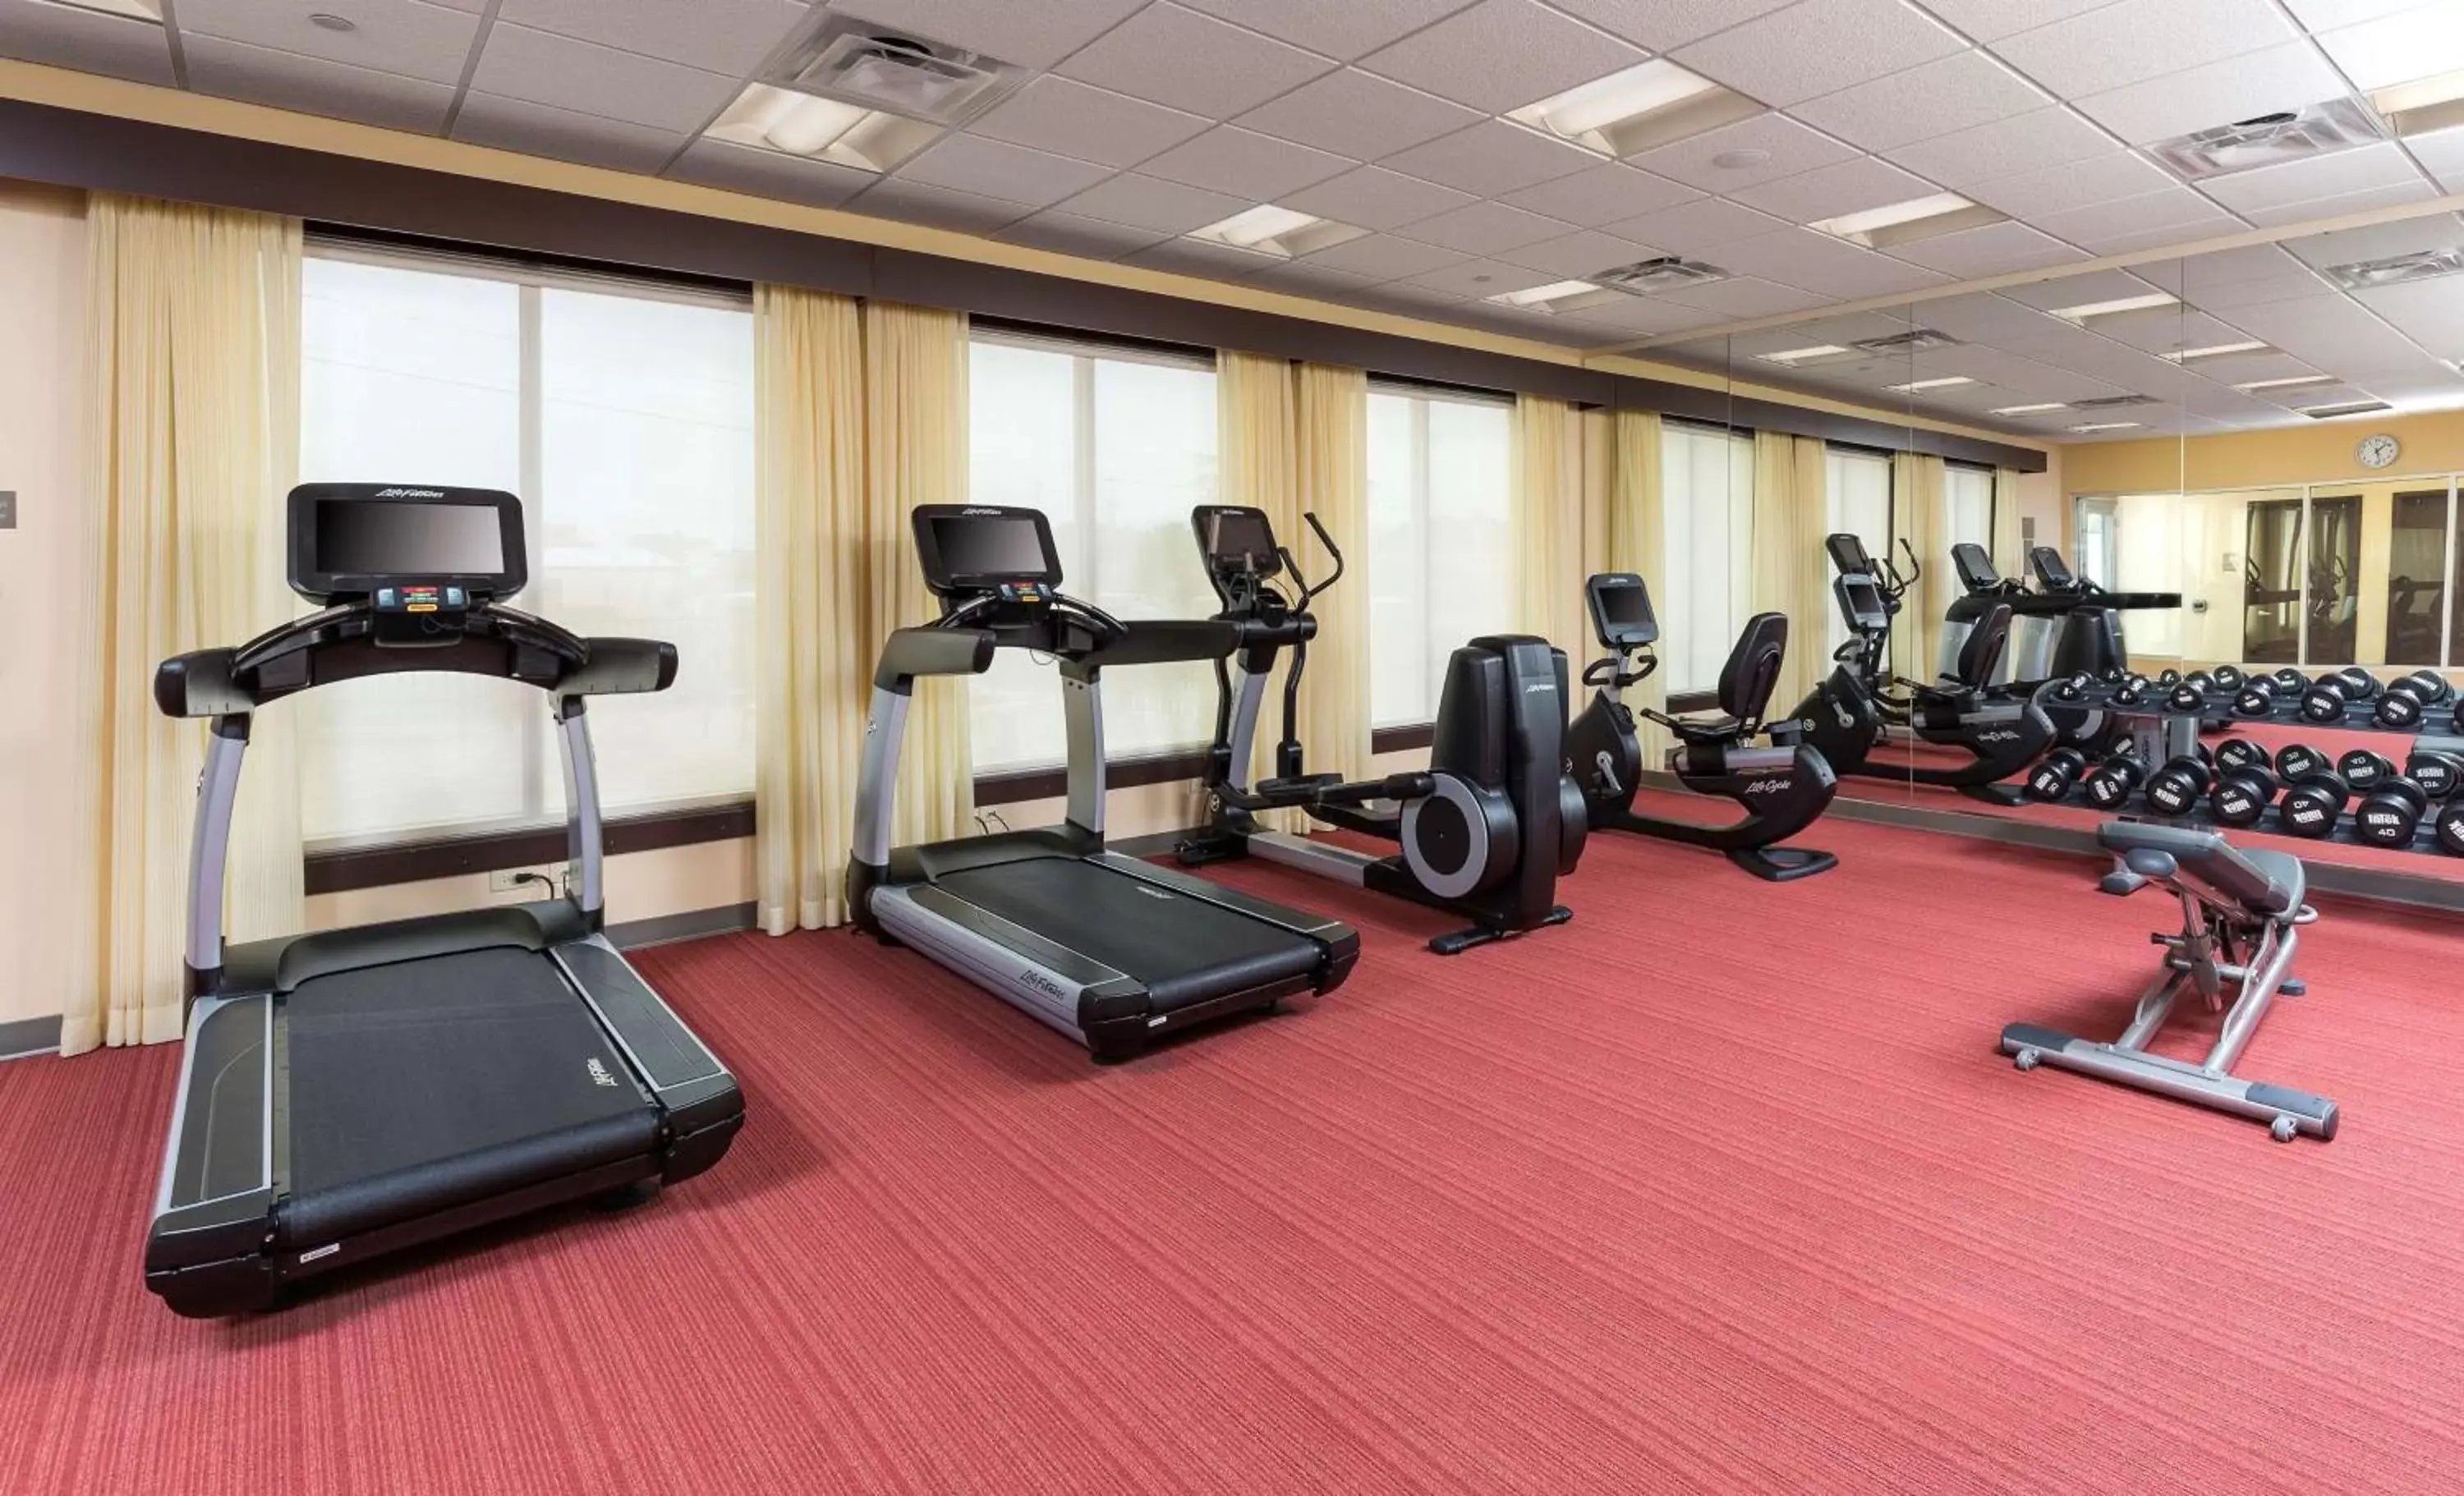 Fitness centre/facilities, Fitness Center/Facilities in Hyatt Place Canton